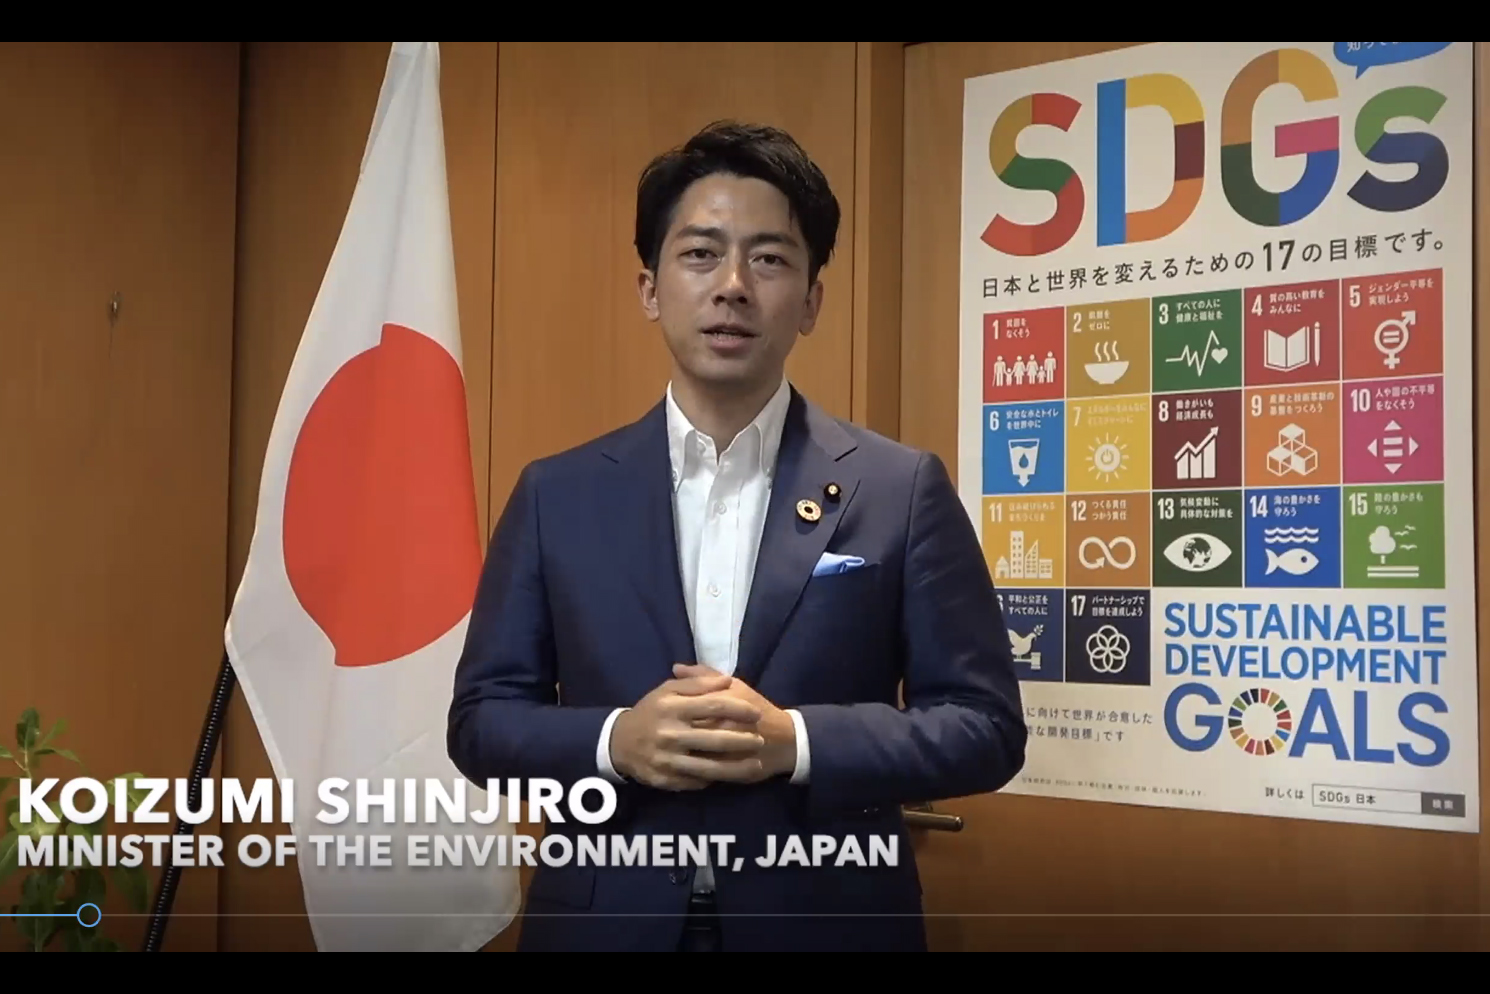 Shinjiro Koizumi, Minister for Environment, Japan